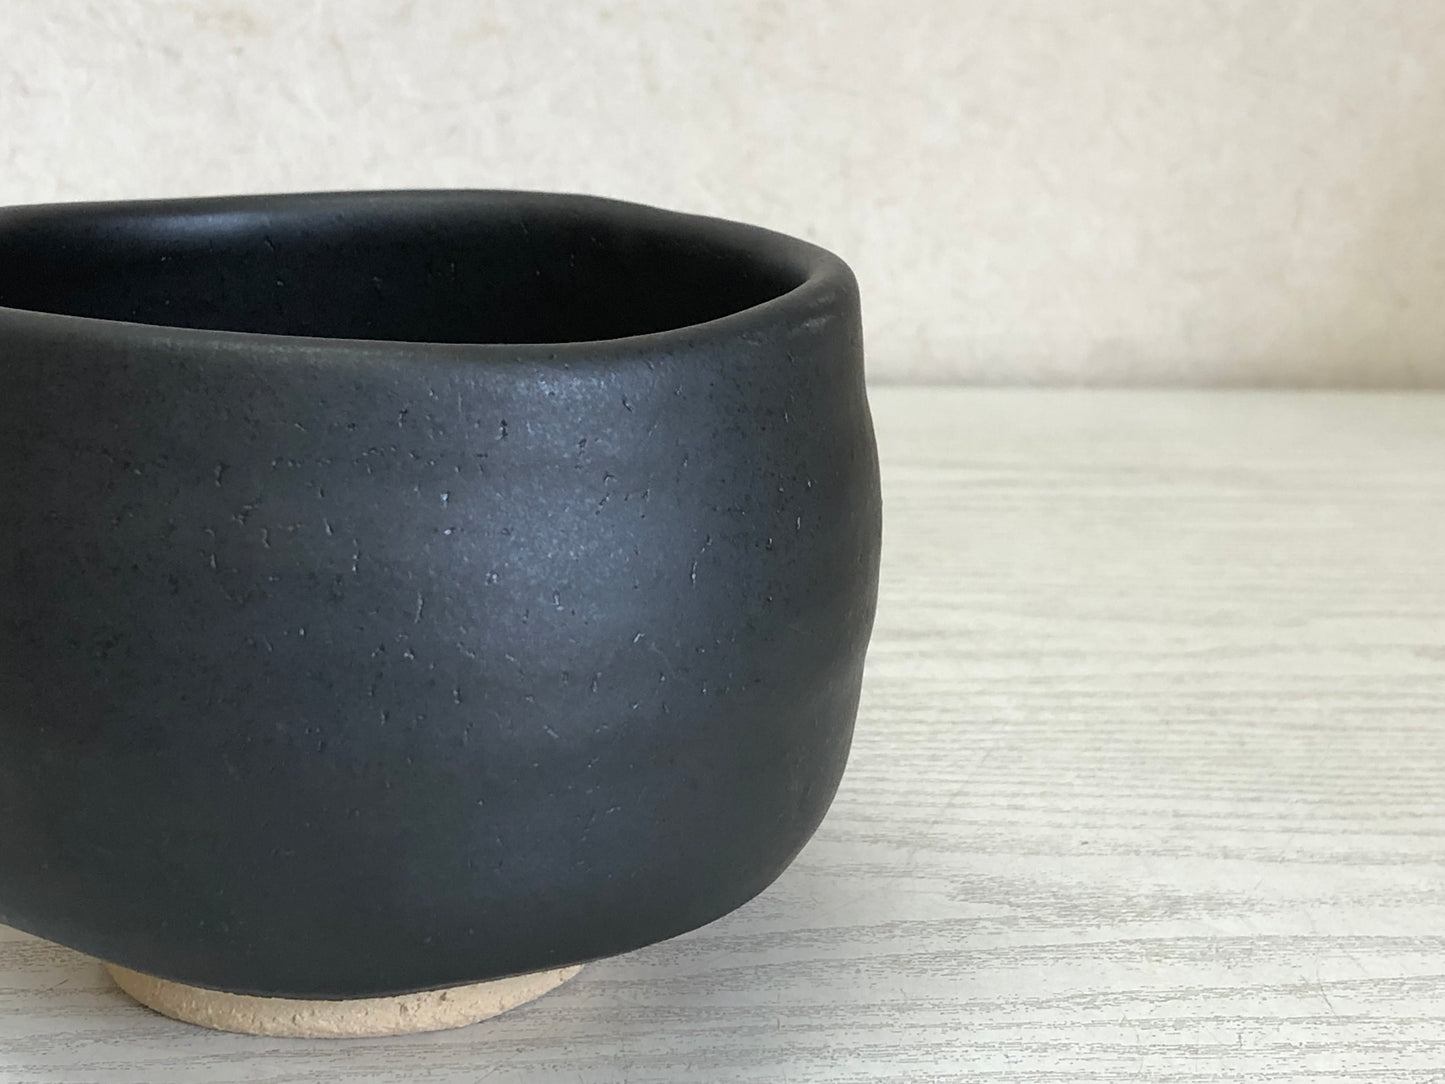 Y3689 CHAWAN Seto-ware signed box hikidashiguro Japan antique tea ceremony bowl